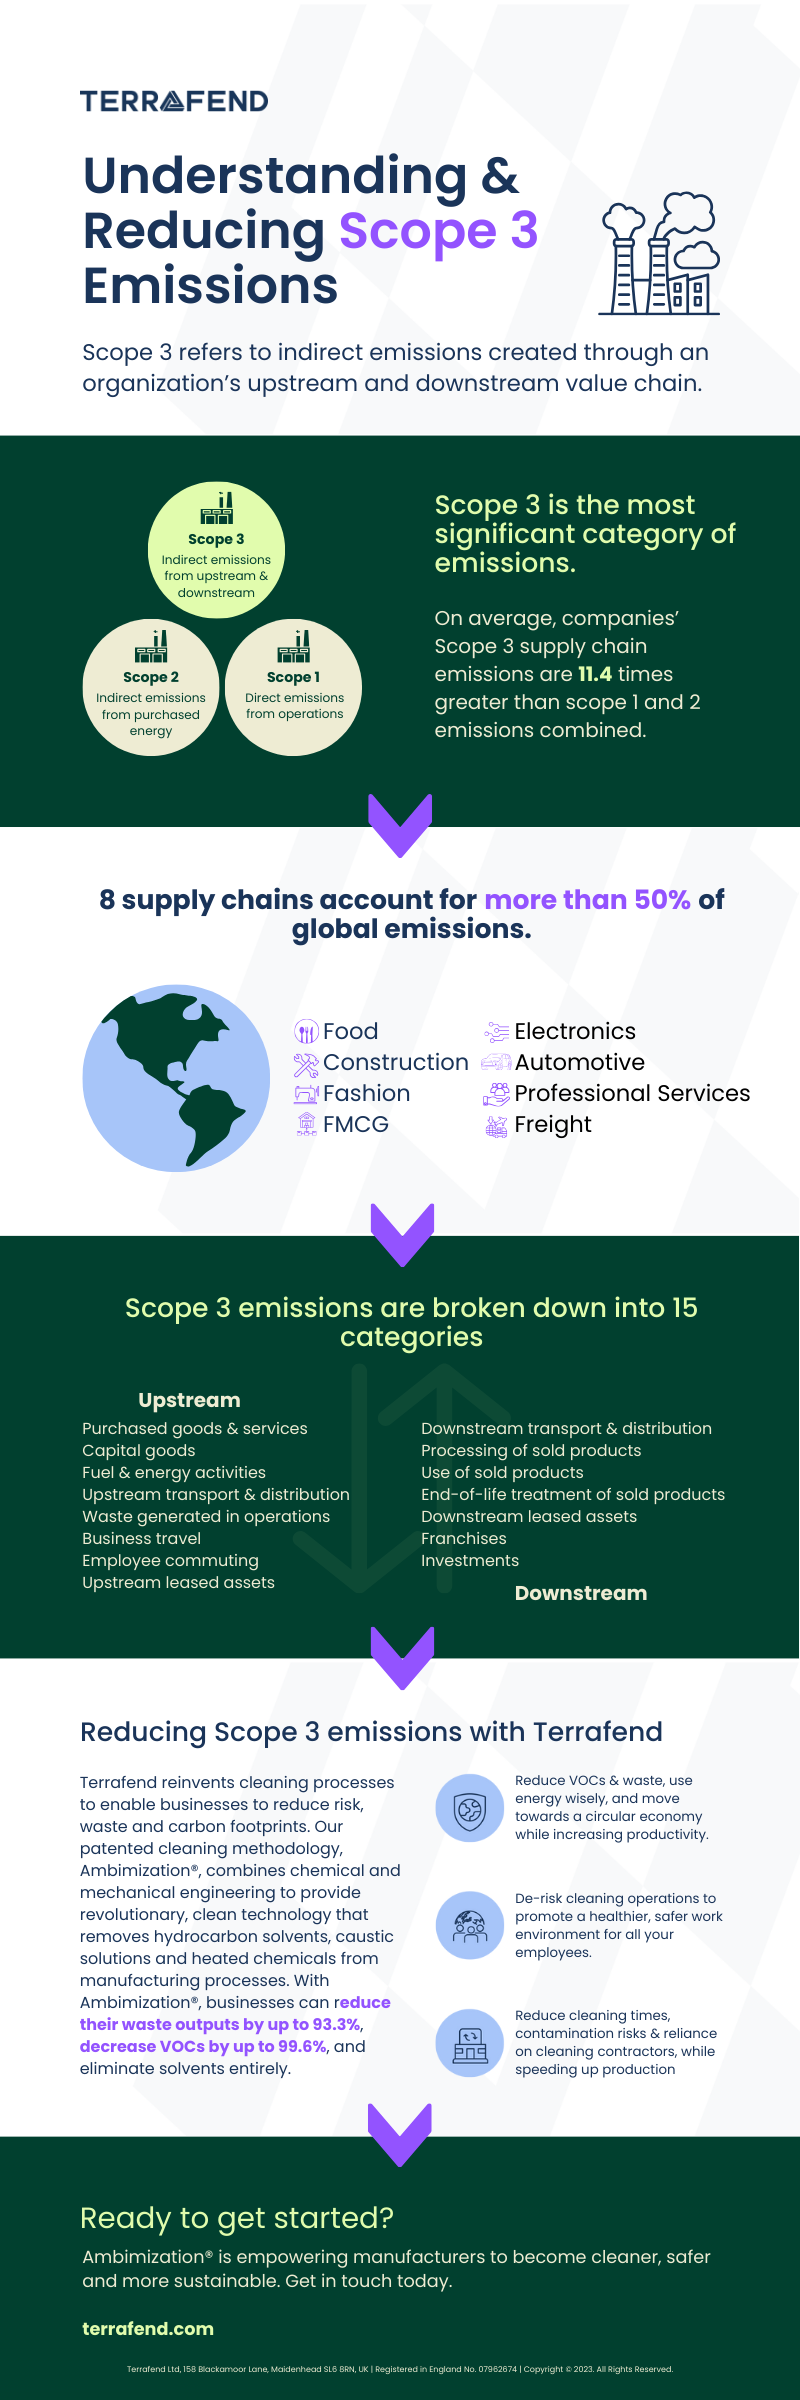 Terrafend - Scope 3 Emissions